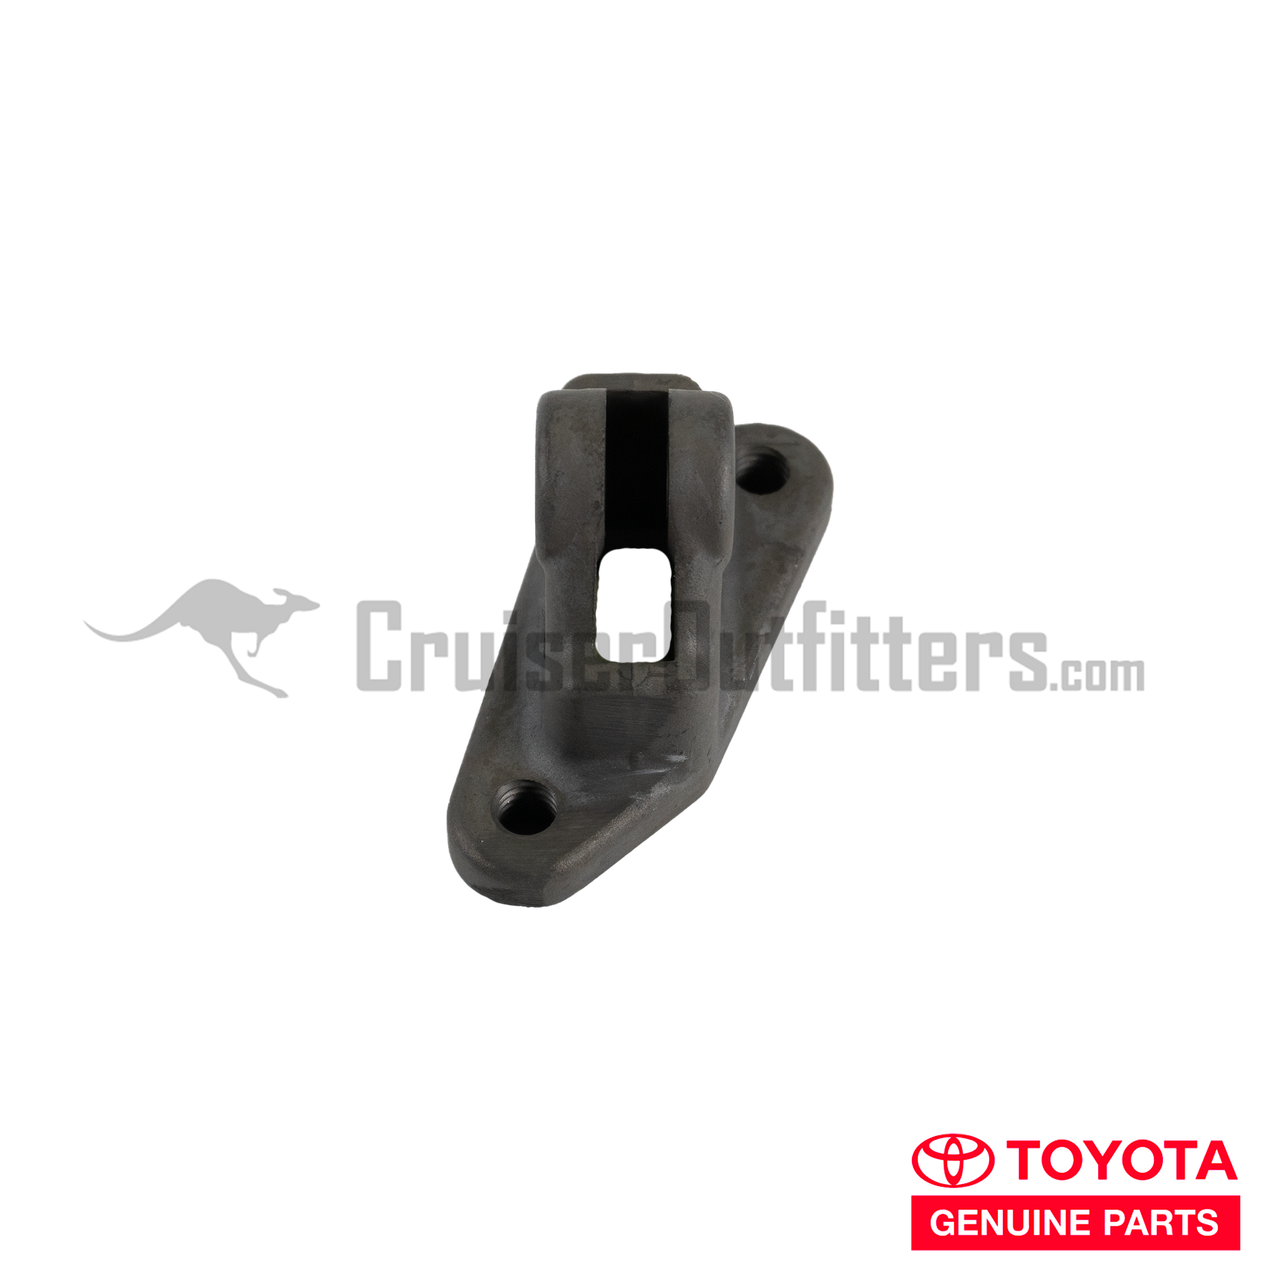 Park Brake Bell Crank Pivot Bracket - Fits 8x/100 Left Hand Side Applications (PB47629)